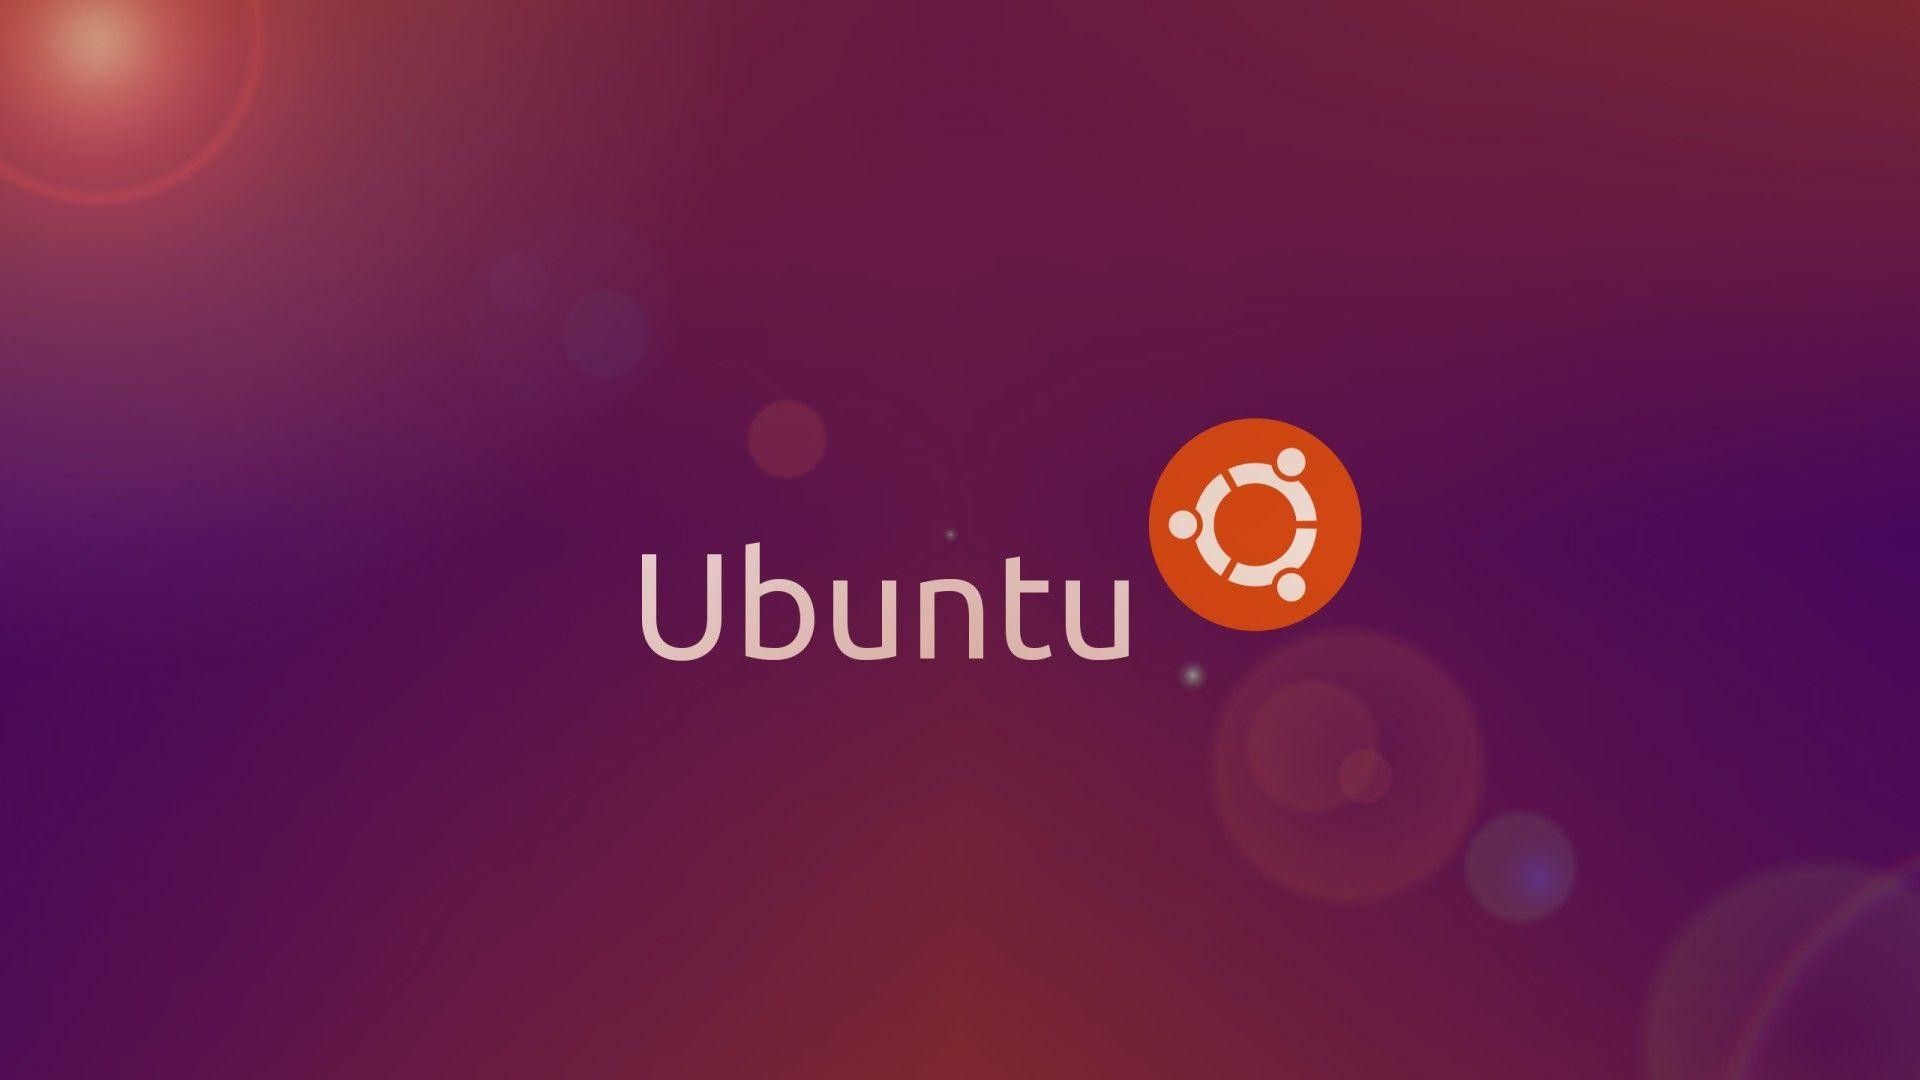 How to install Ubuntu operating system